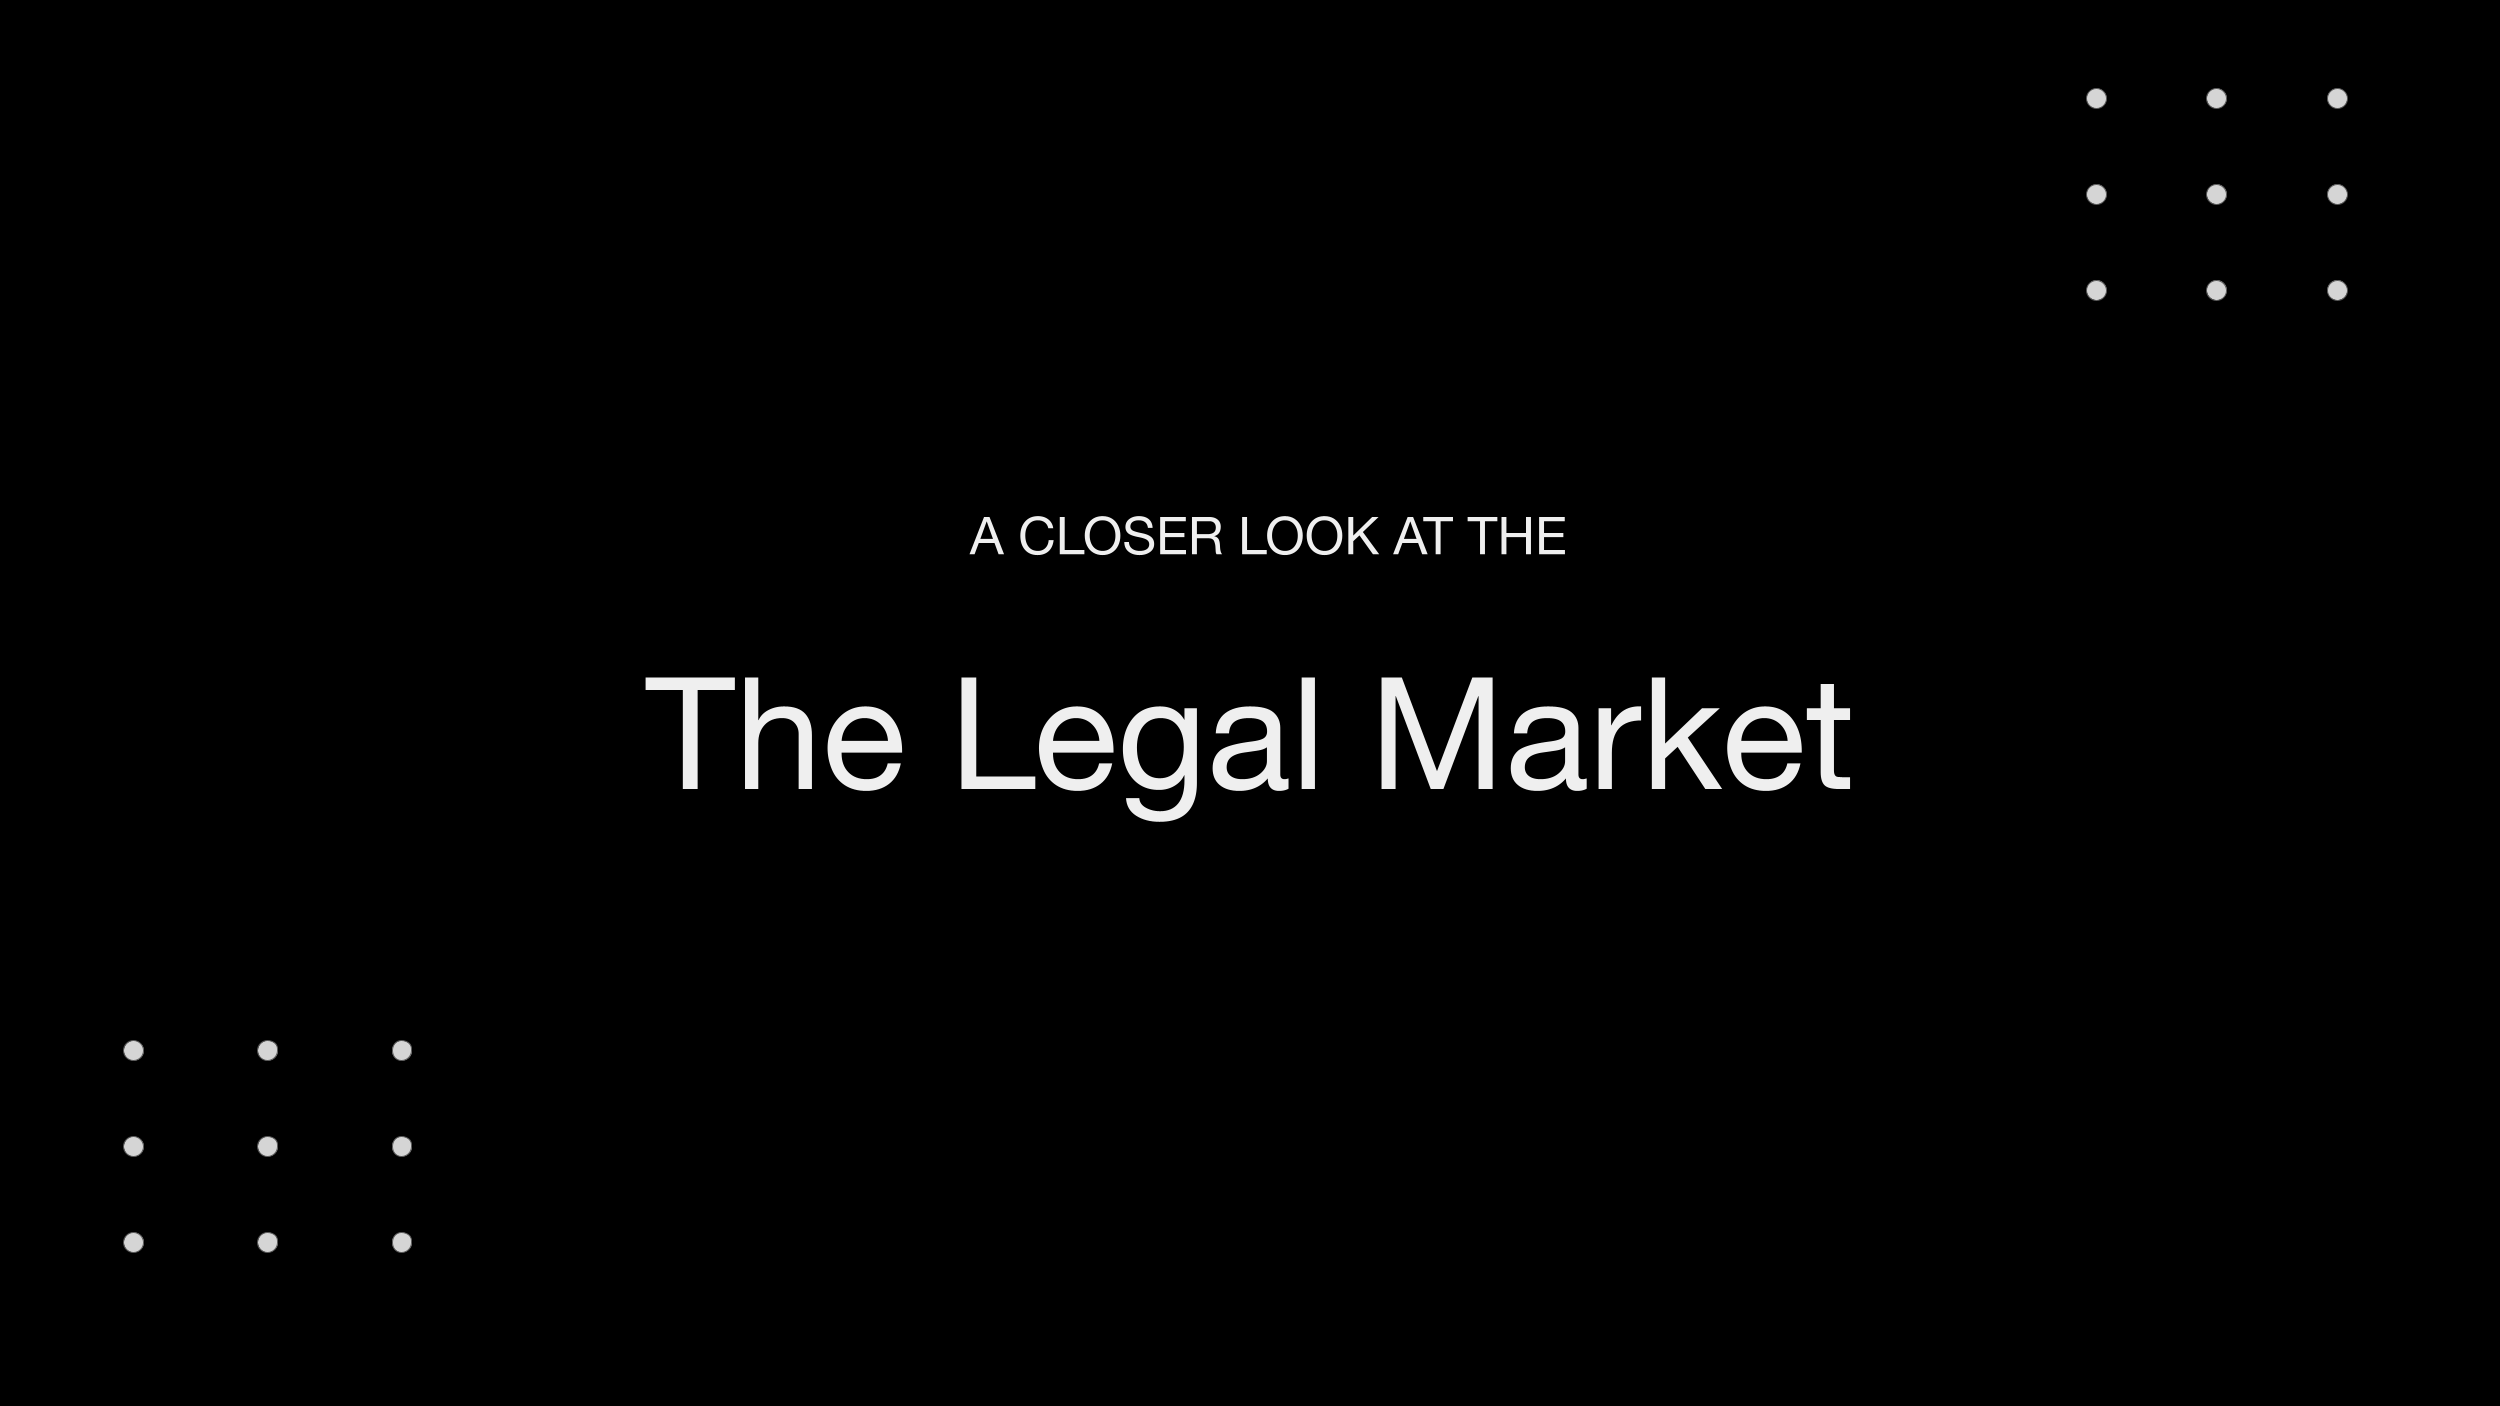 A closer look at the legal market